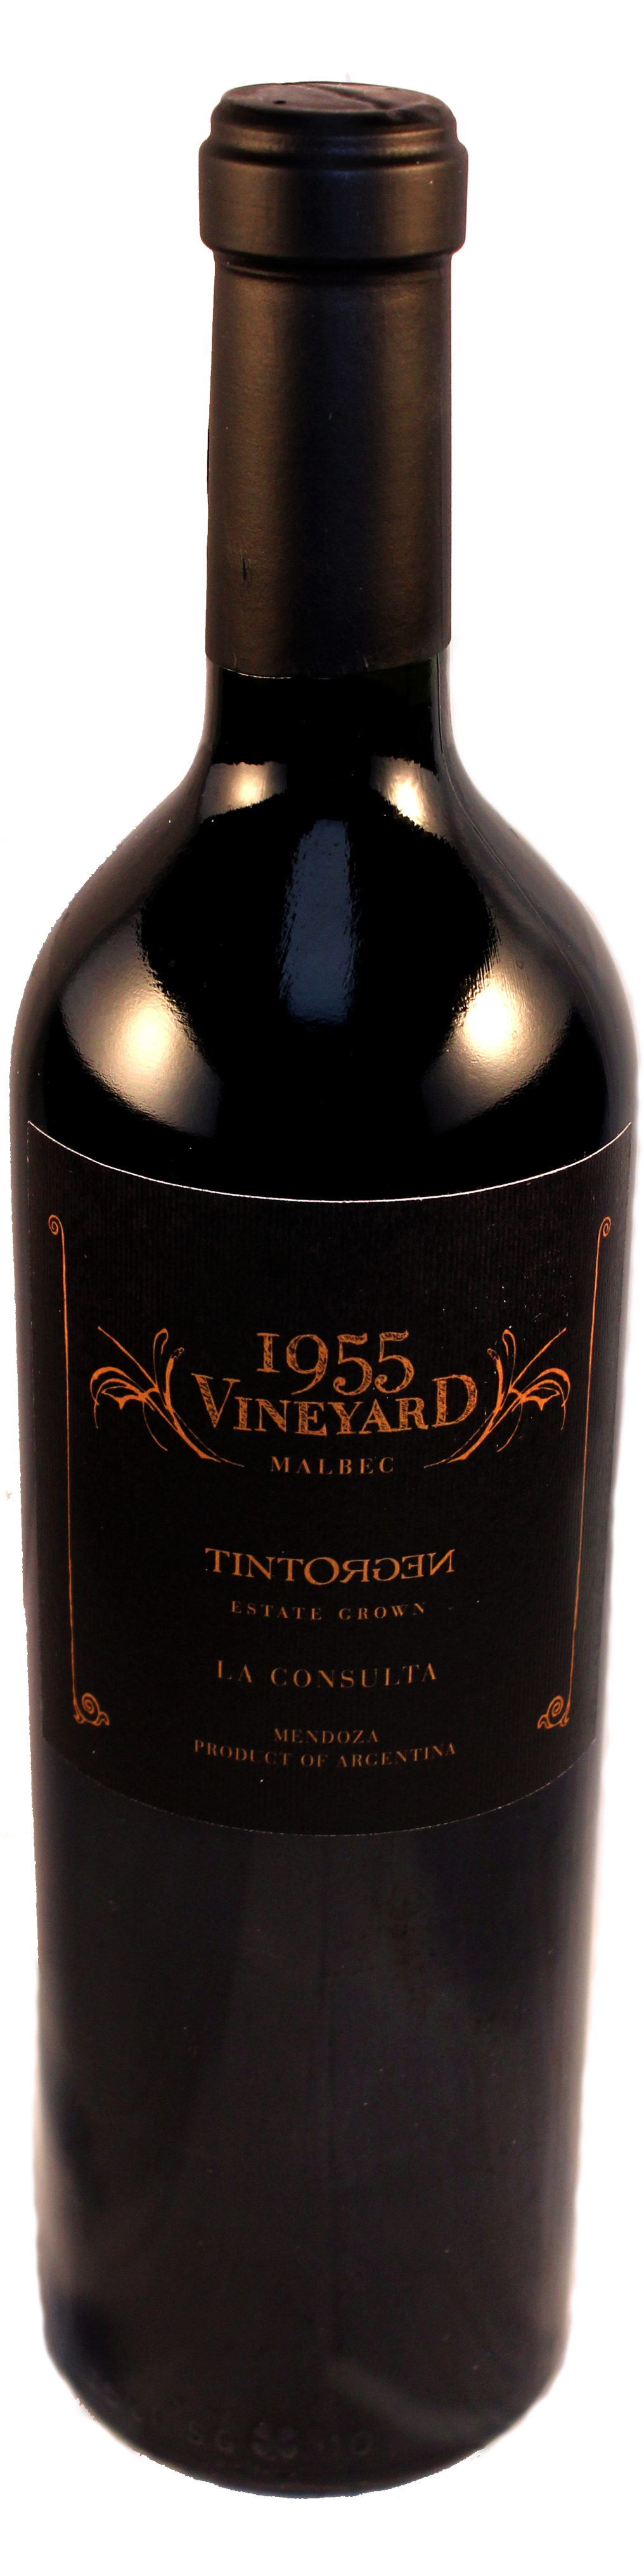 Bottle shot of 2011 'Vineyard 1955'